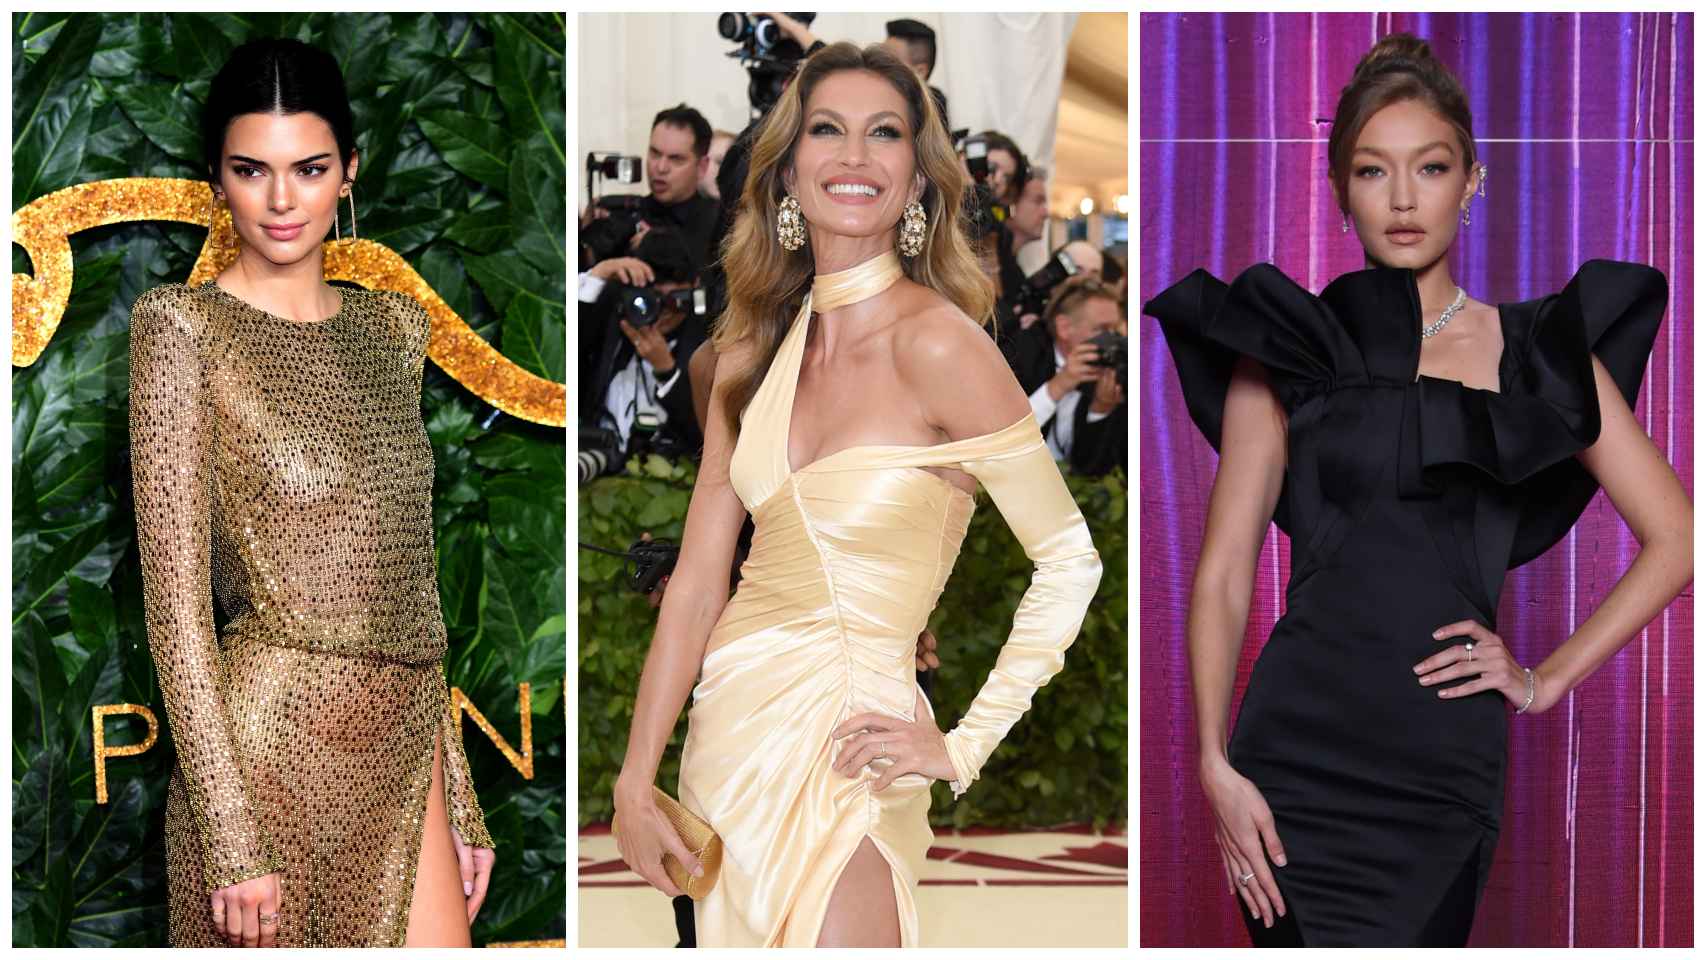 Algunas de las modelos mejor pagados, de izq a dcha: Kendall Jenner, Gisele Bündchen y Gigi Hadid.